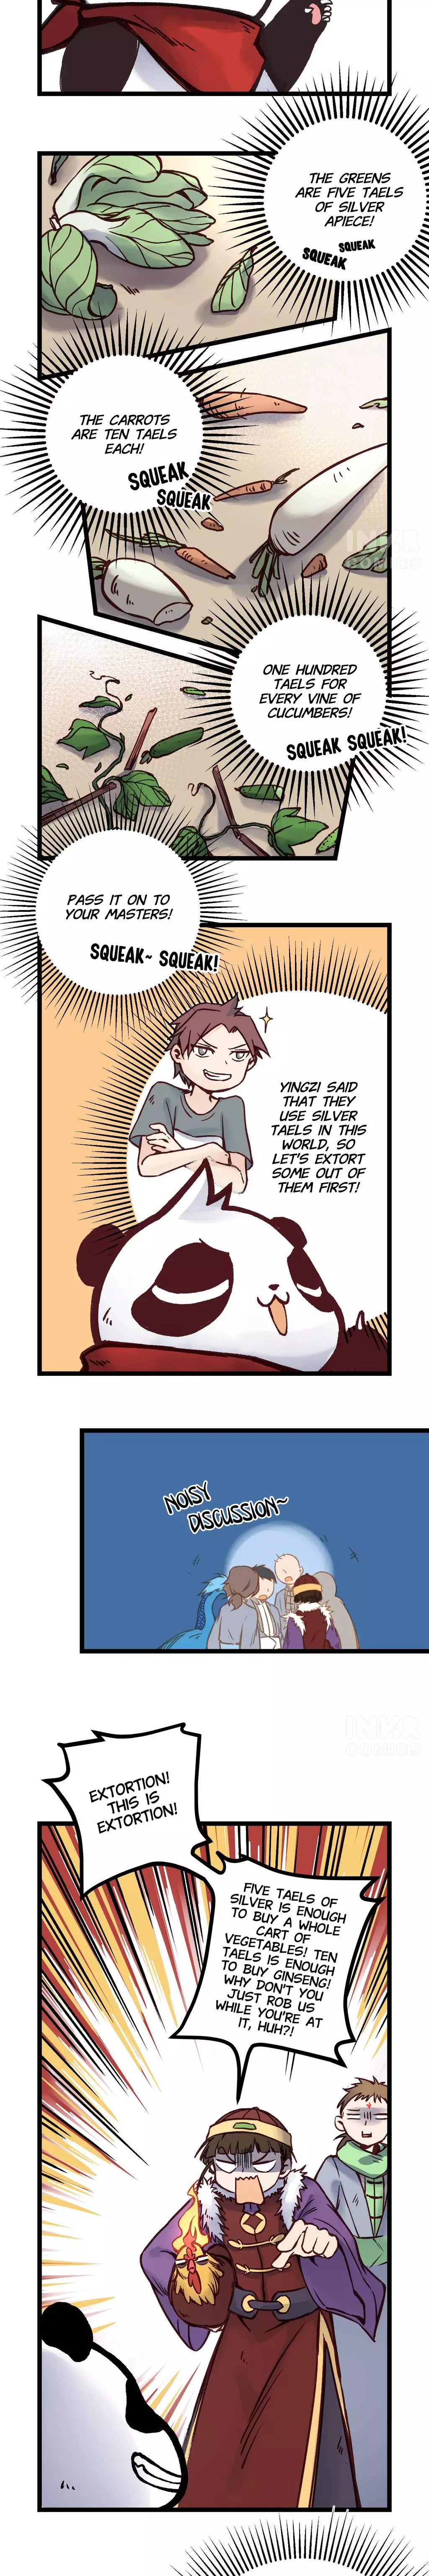 Naughty Panda - 9 page 4-0c7a2707